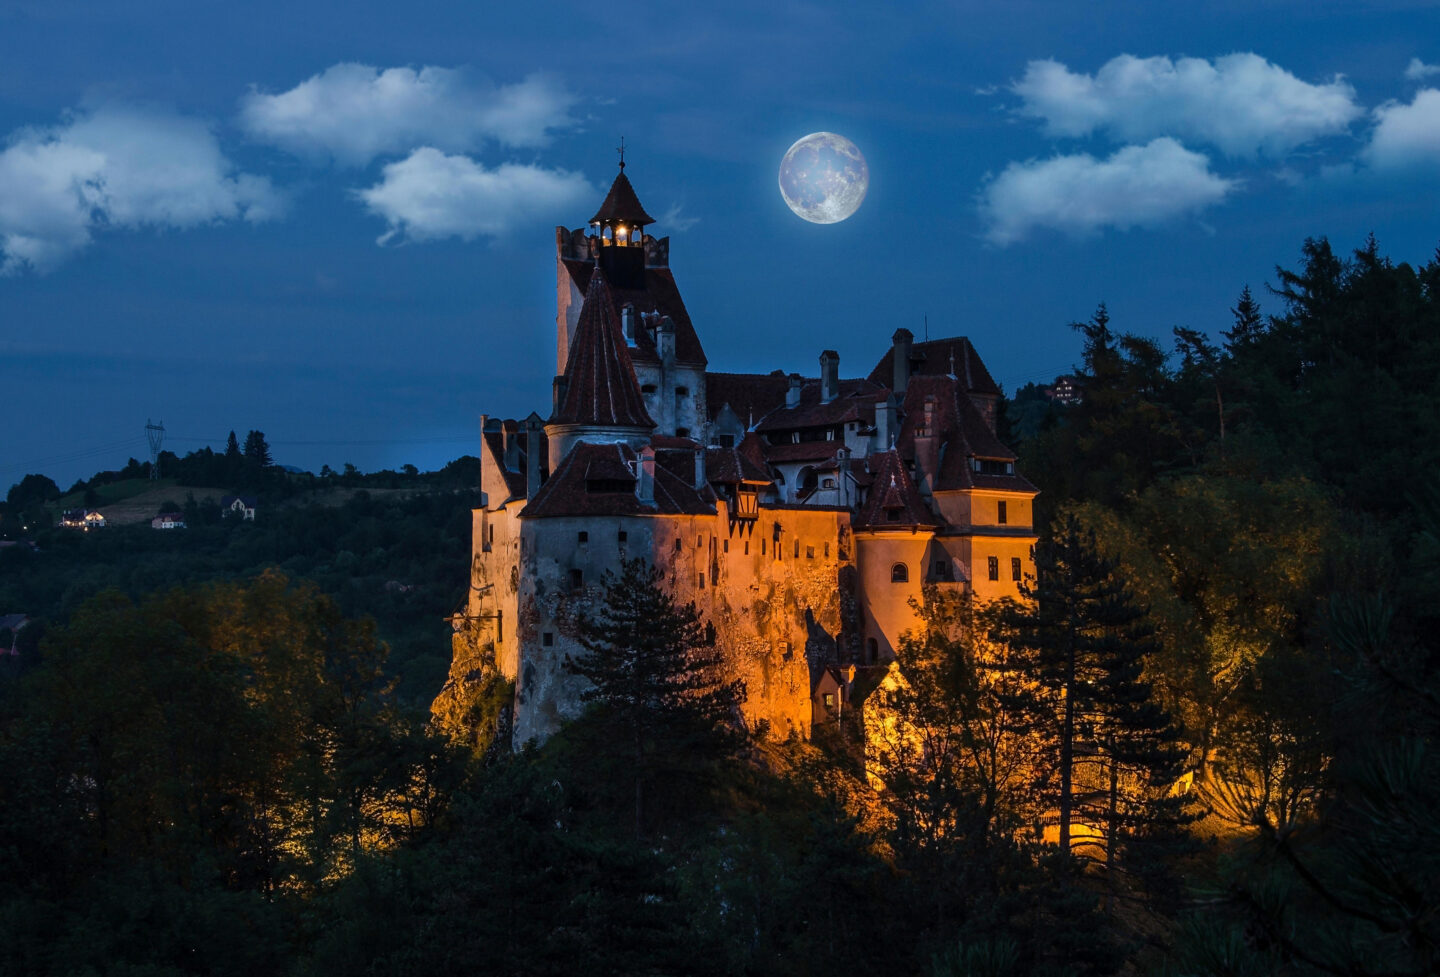 Bran Castle - Dracula's medieval castle - at night with full moon, Transylvania. Romania